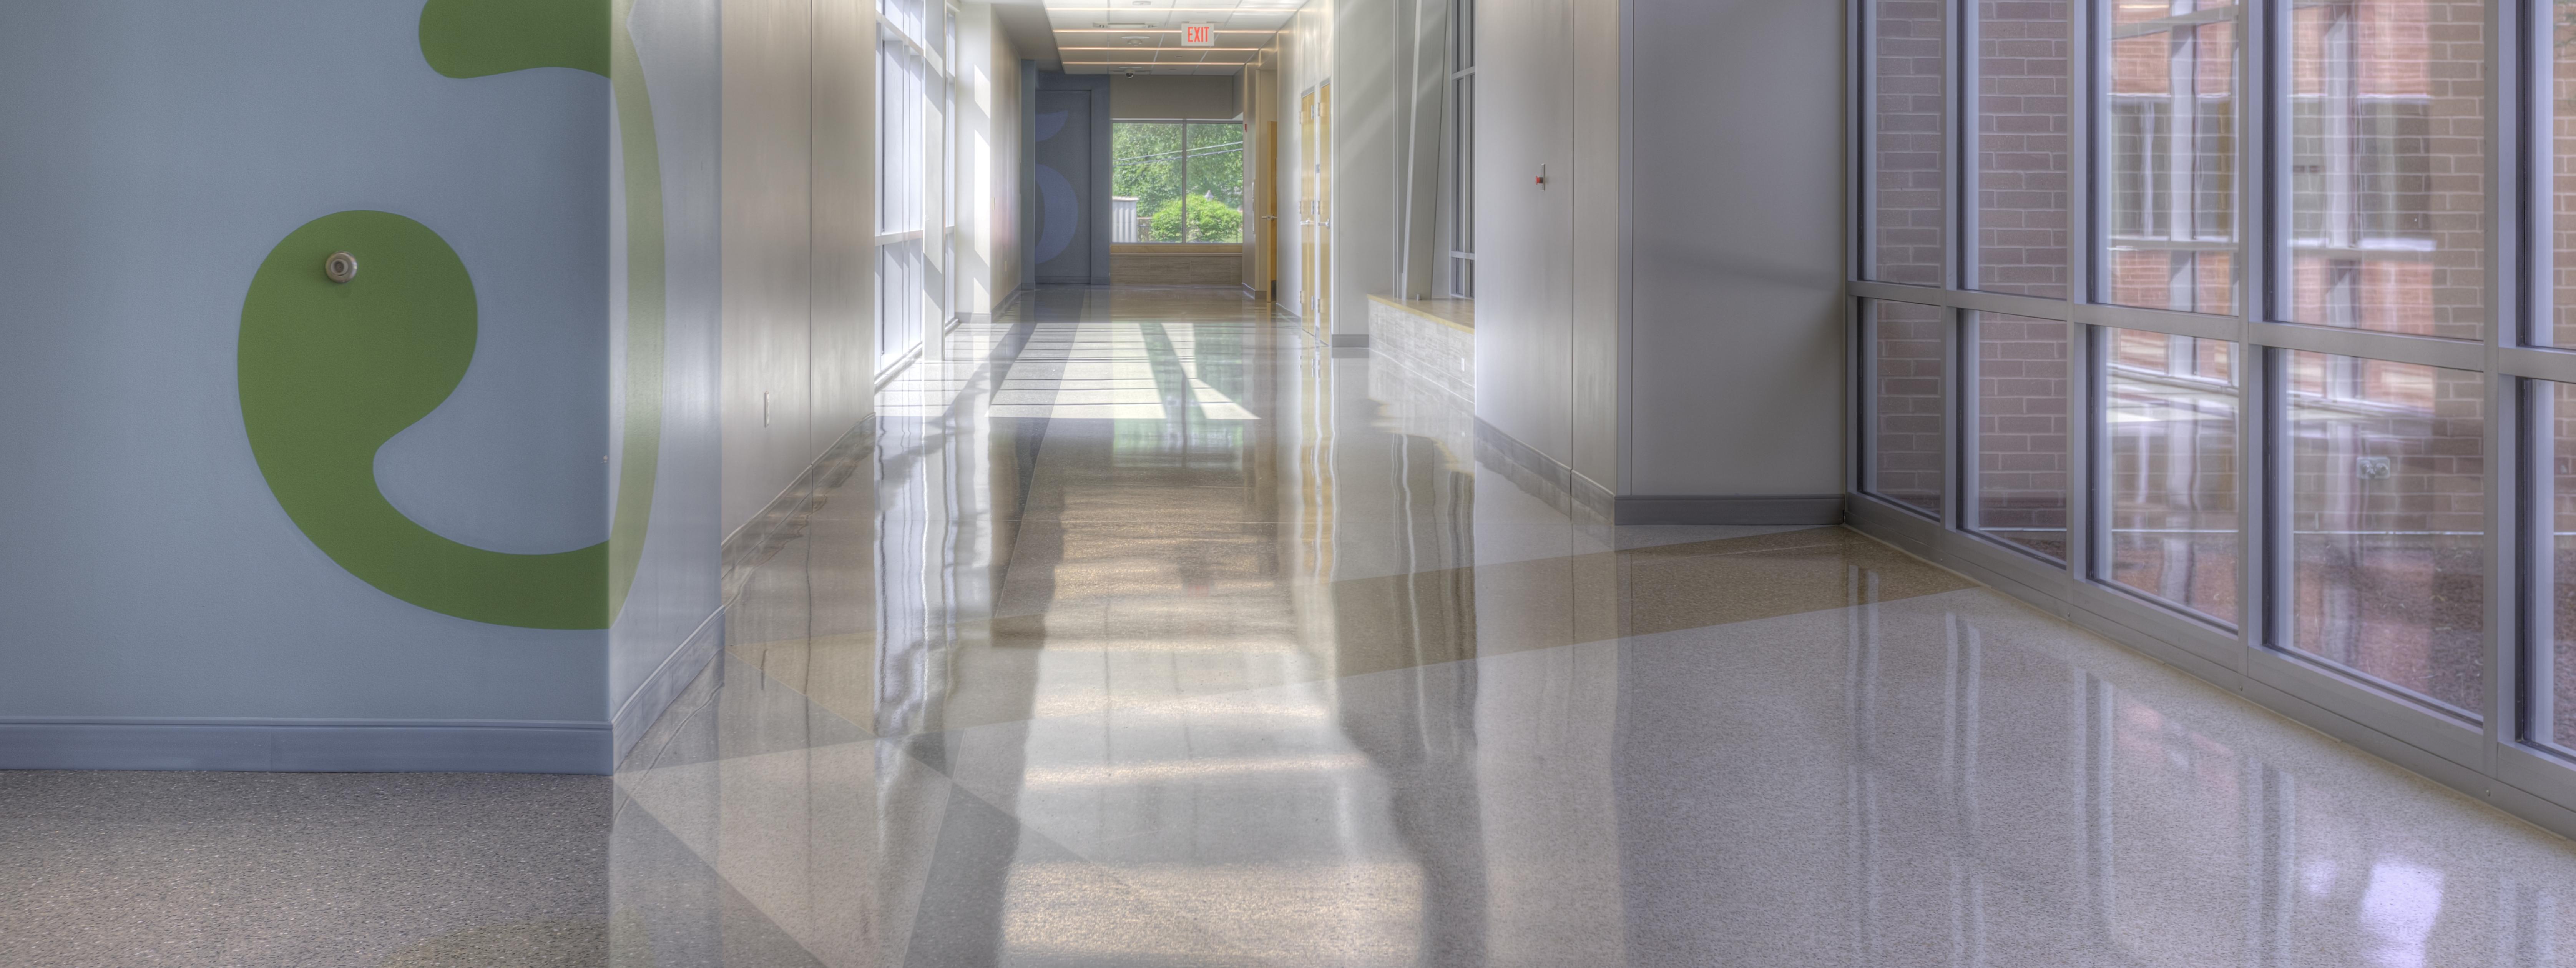 Shiny Floor in a school hallway.